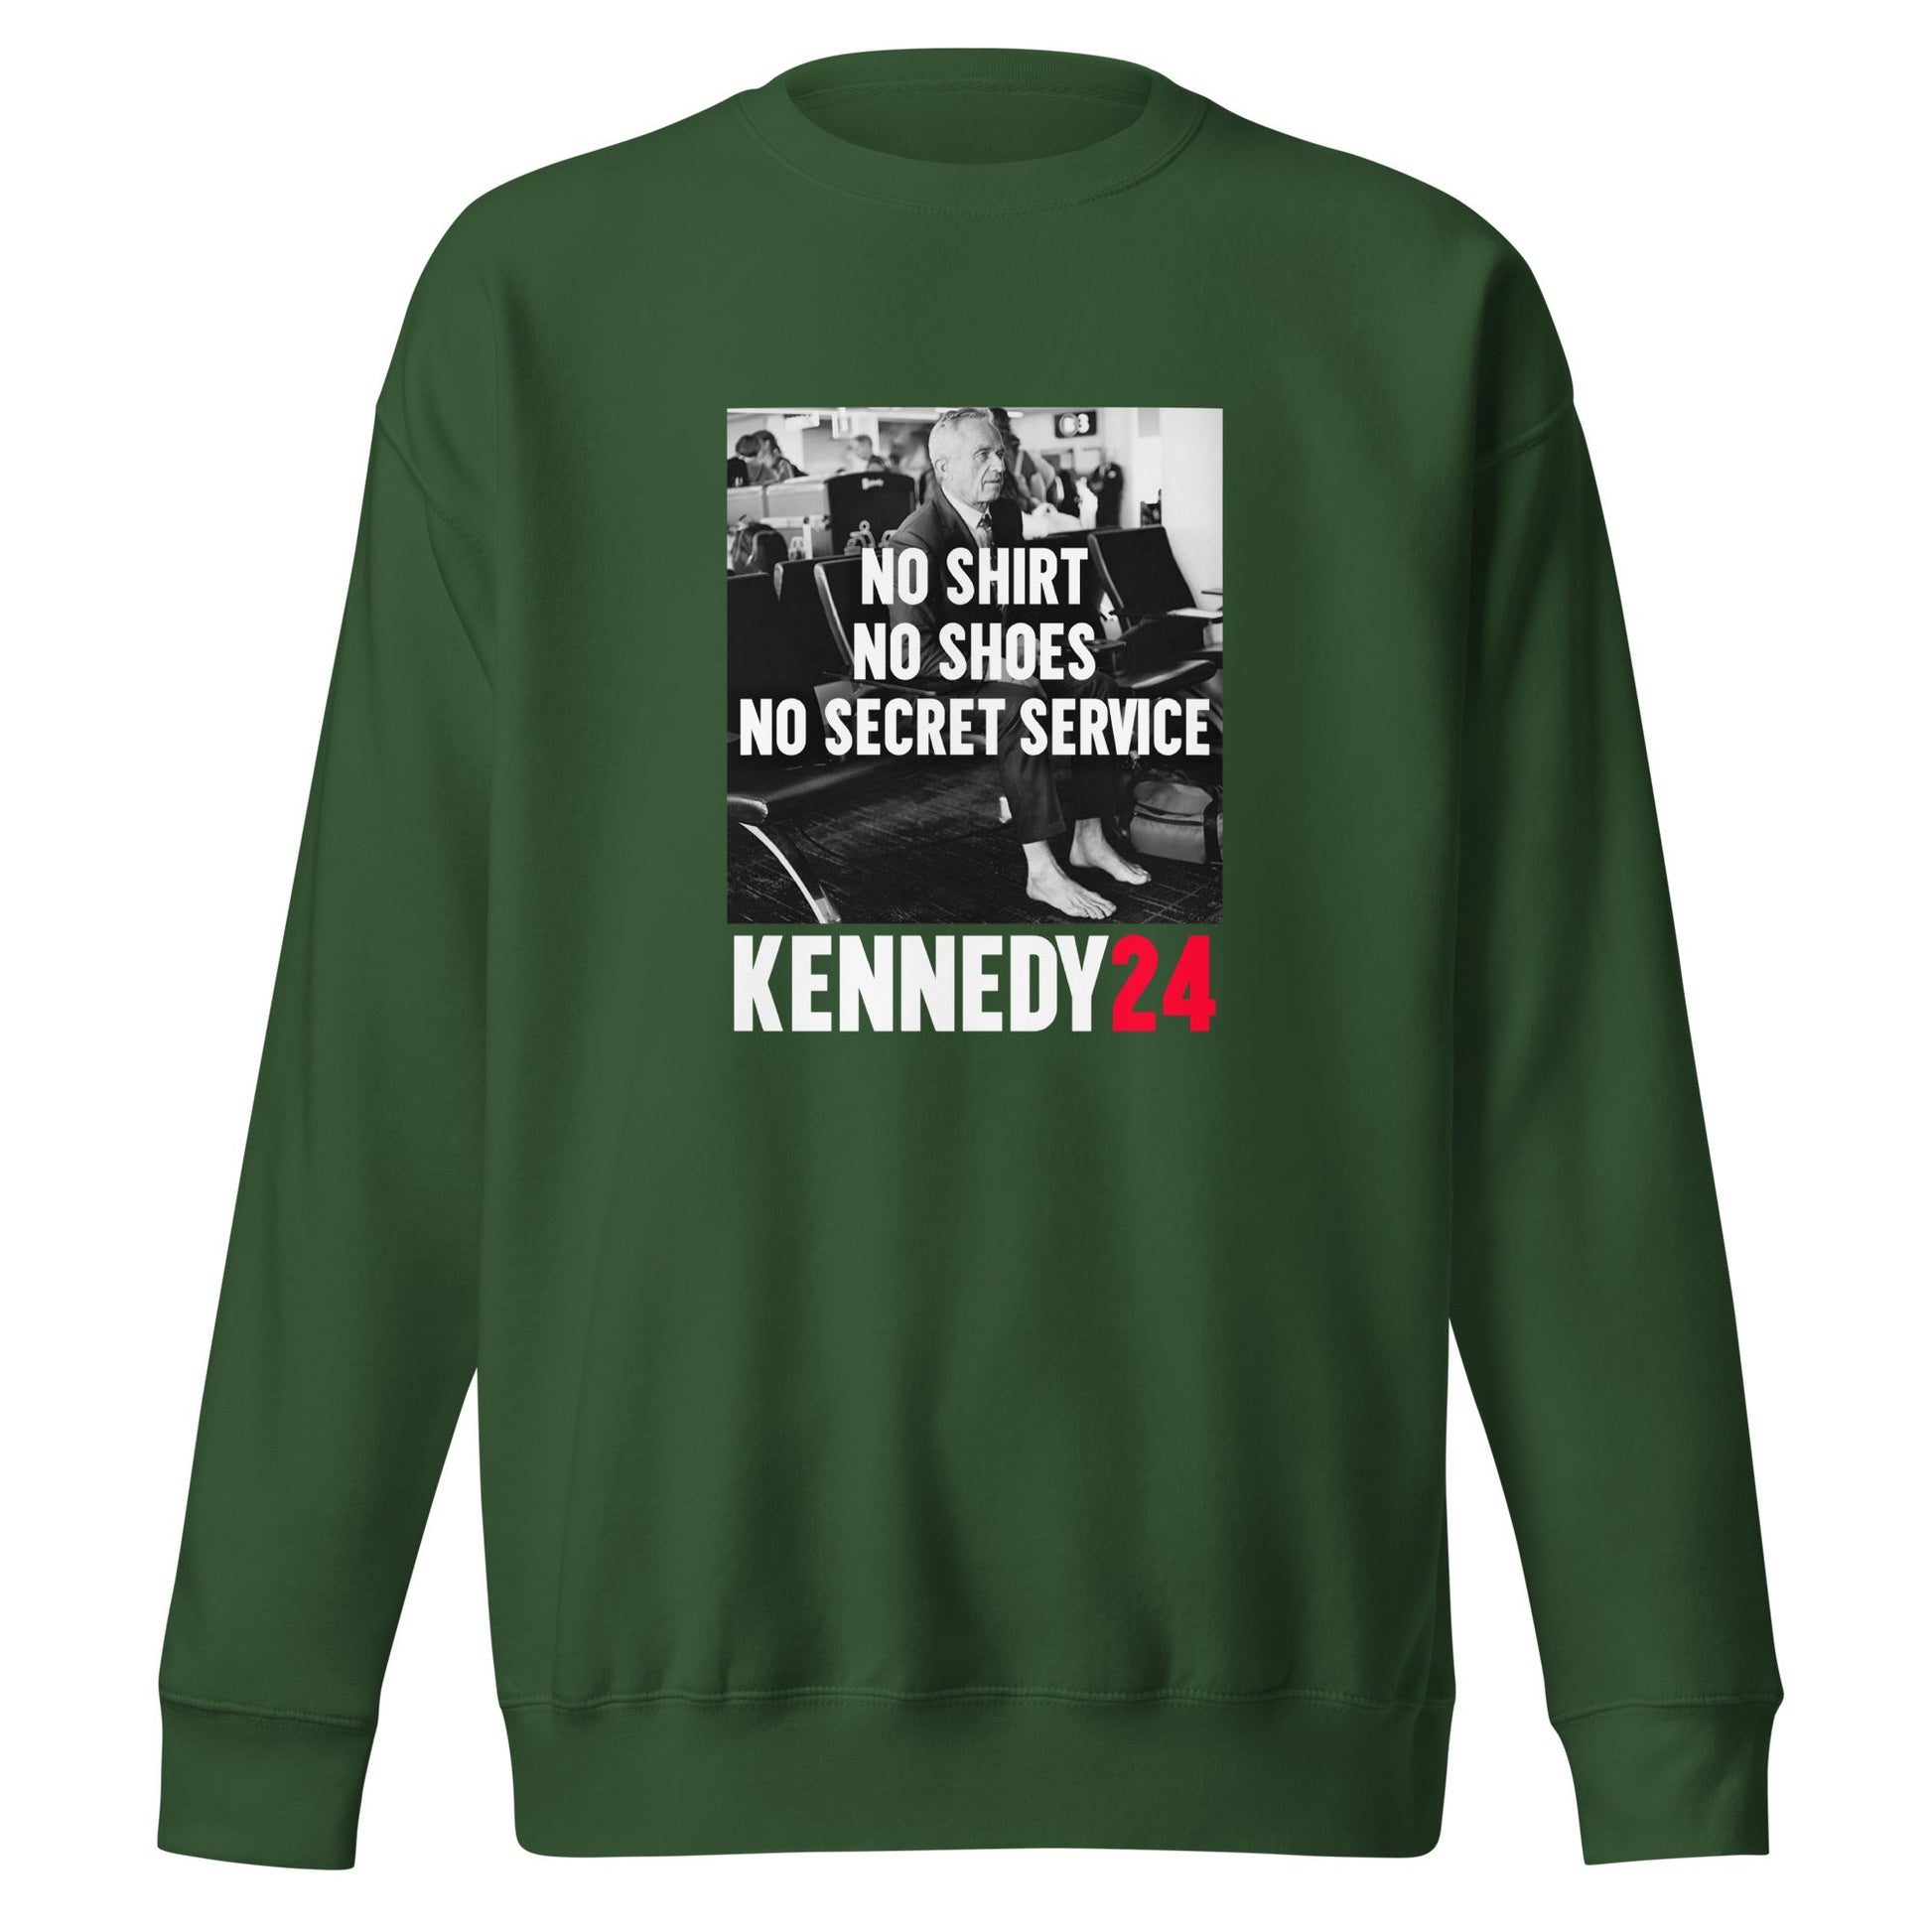 No Shirt, No Shoes, No Secret Service Unisex Premium Sweatshirt - TEAM KENNEDY. All rights reserved